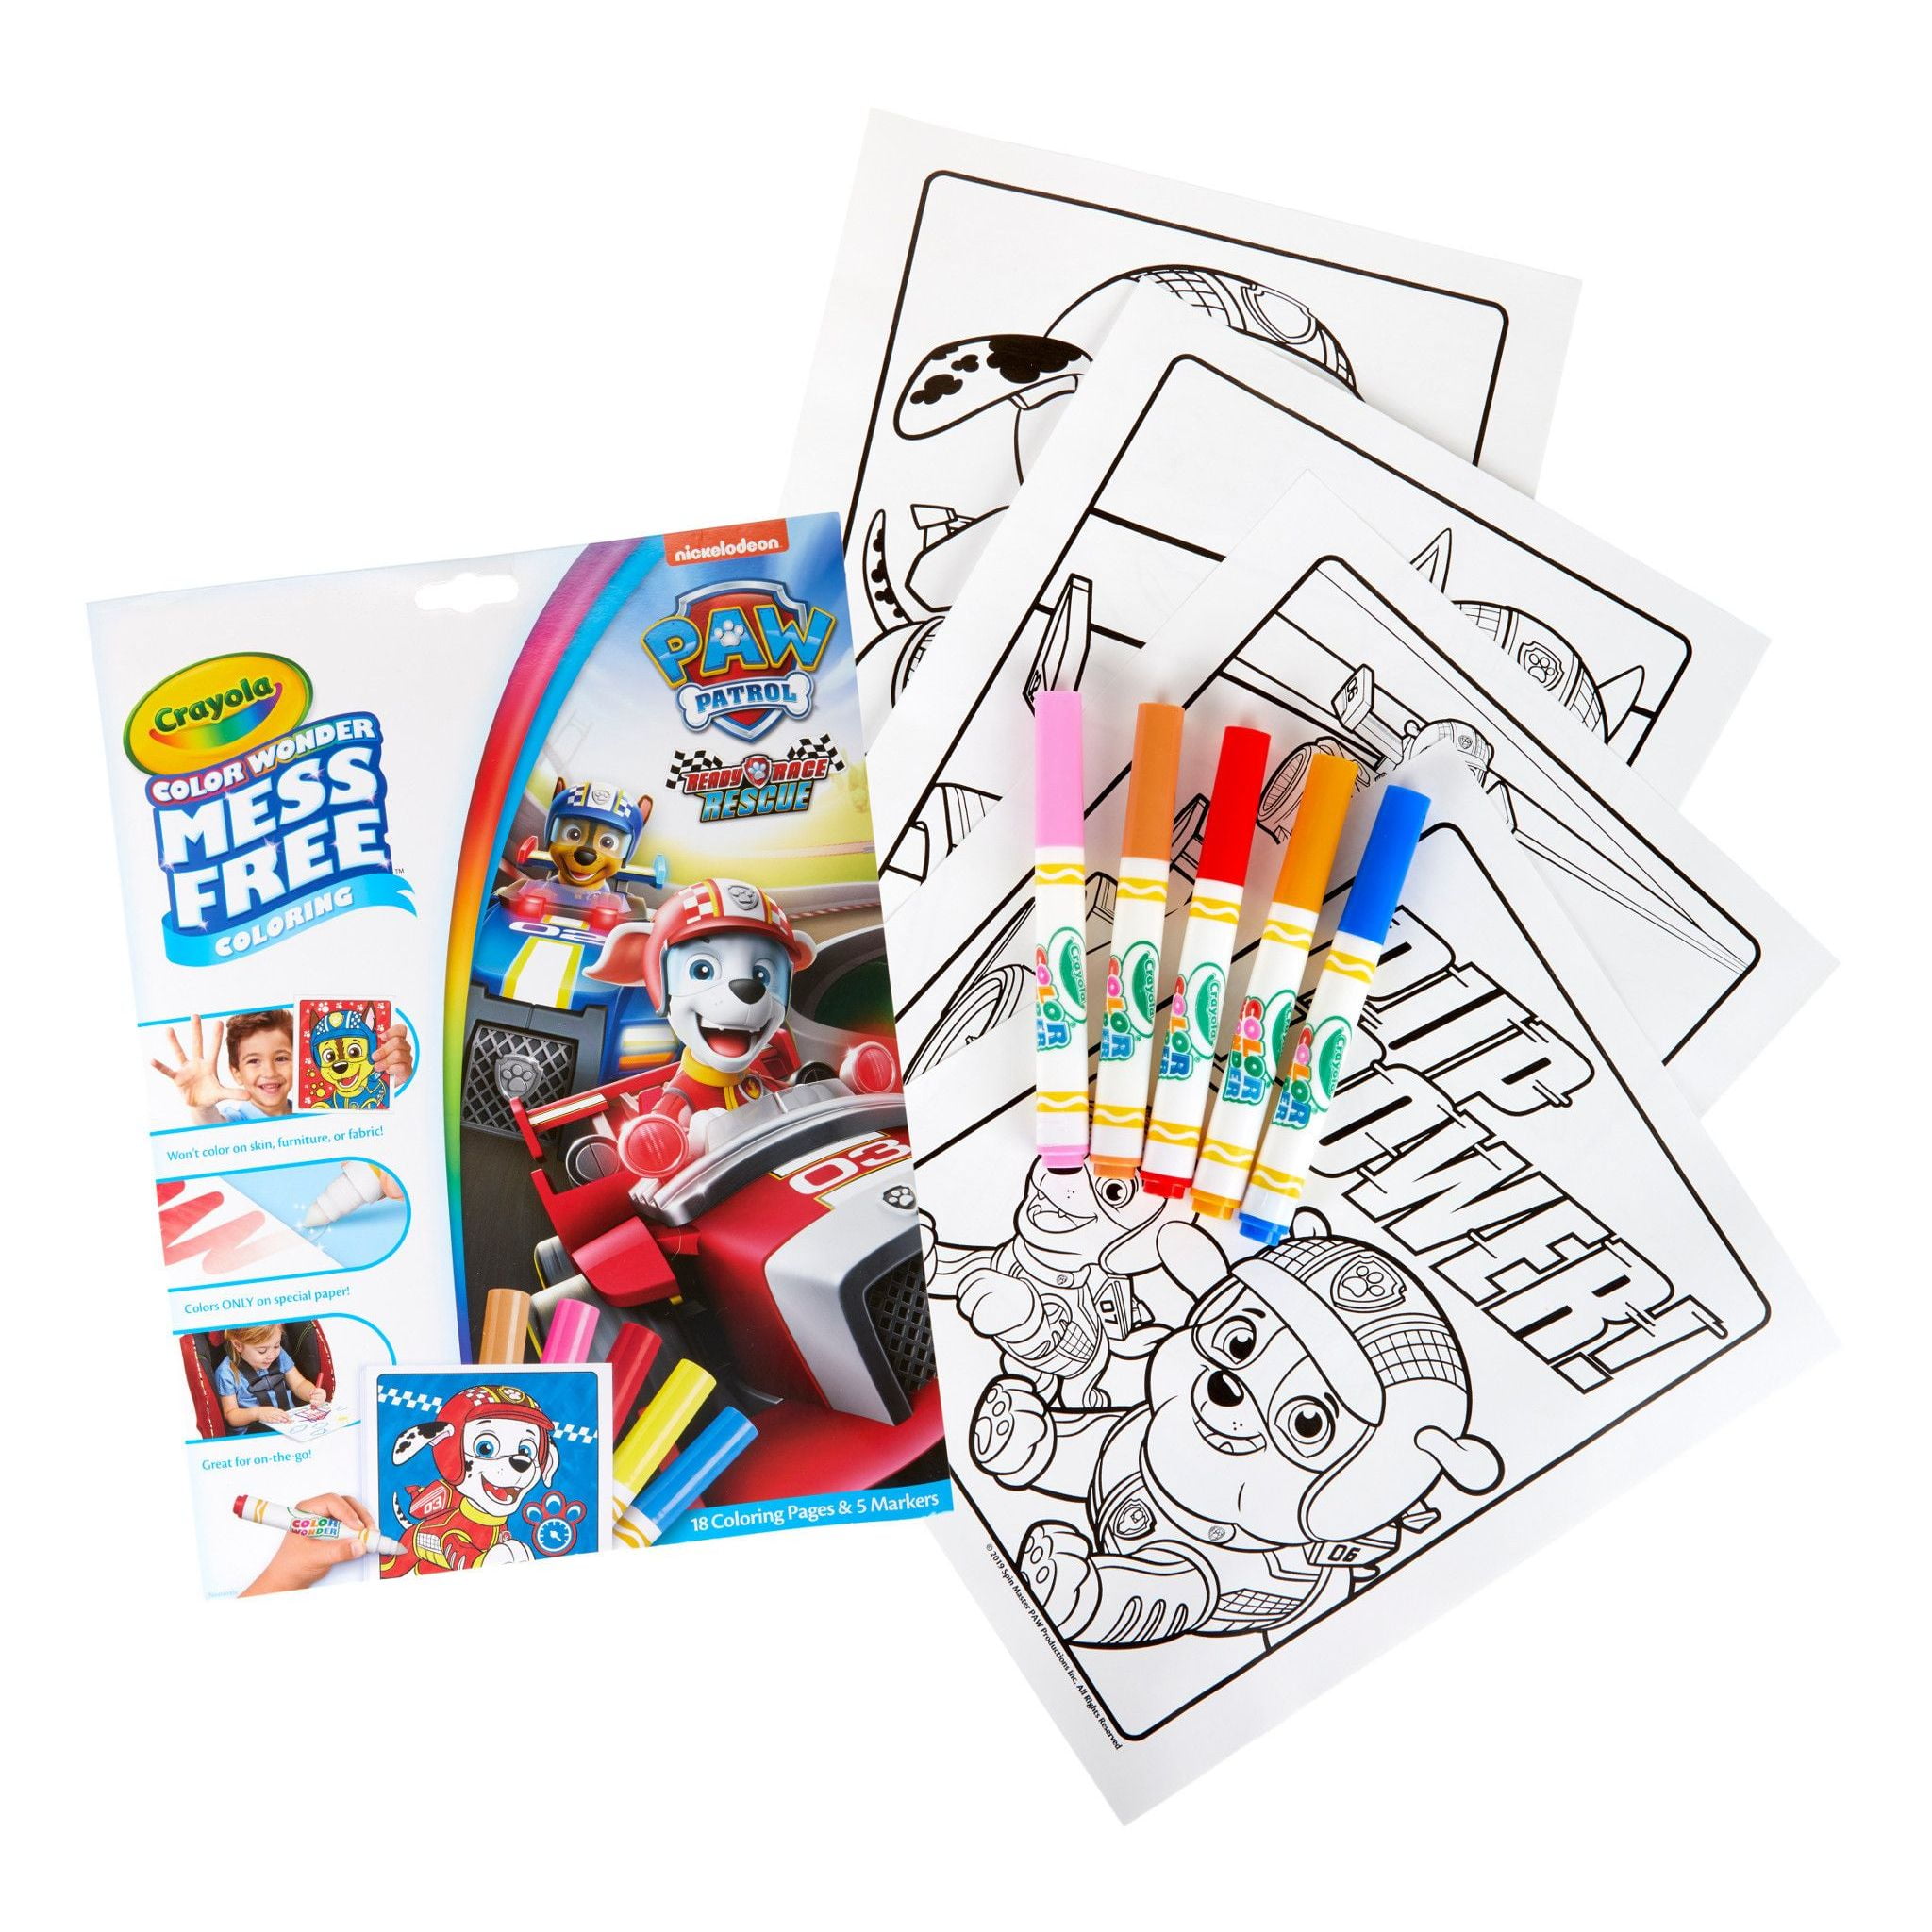 Crayola Color Wonder Paw Patrol Coloring Set, School Supplies, 18 Pages, Beginner Child